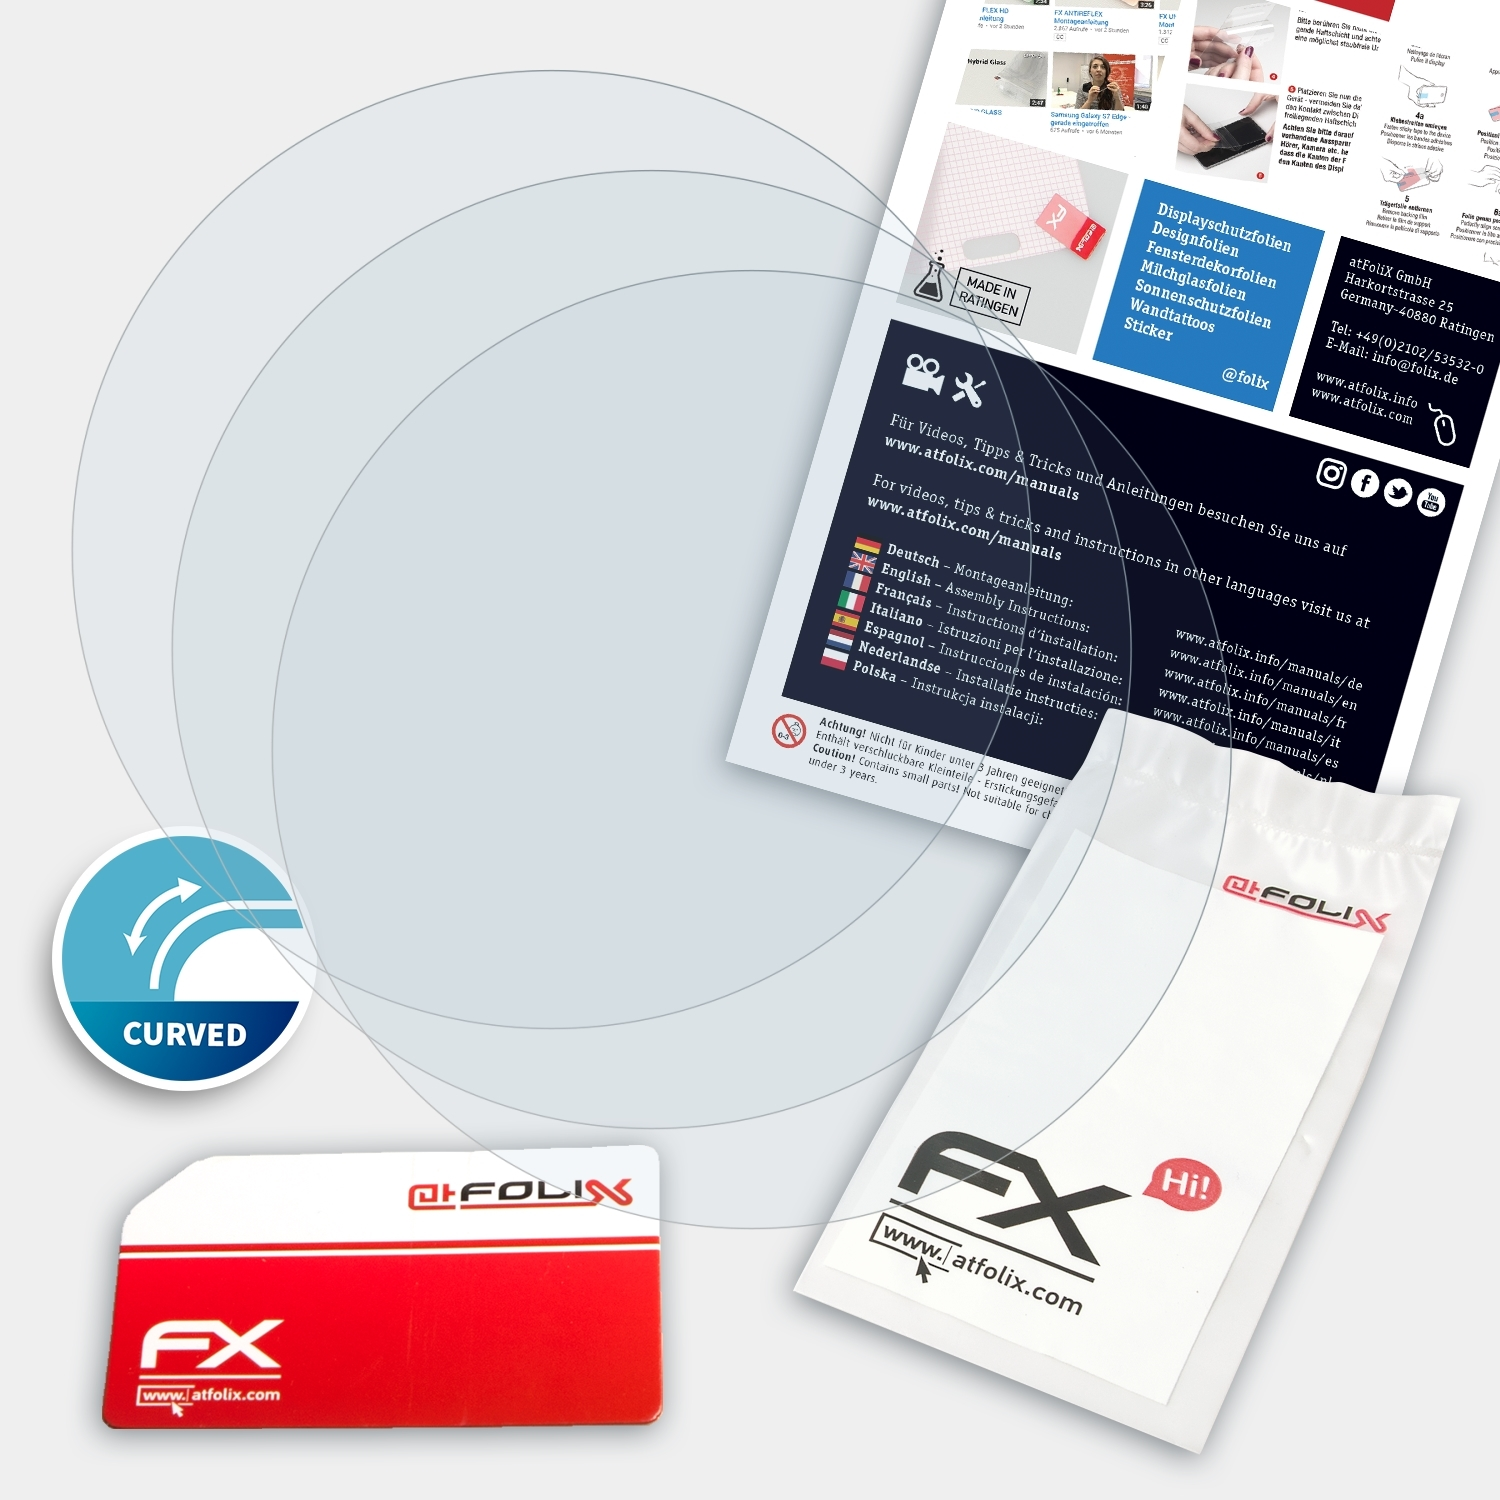 ATFOLIX 3x 2 Venu Displayschutz(für Garmin Plus) FX-ActiFleX